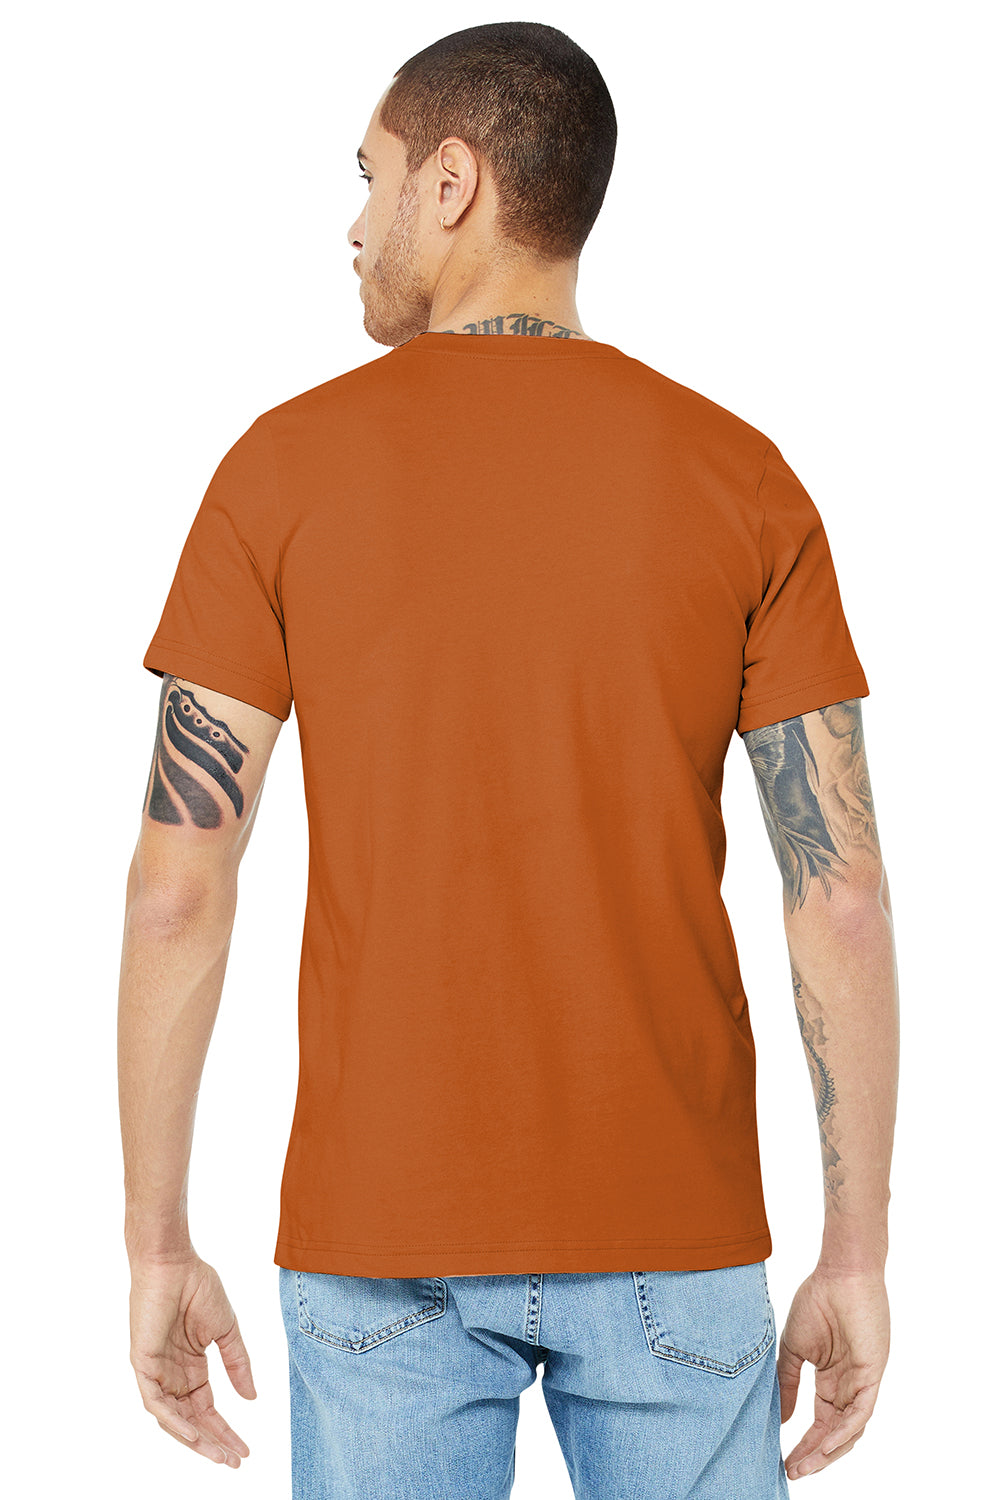 Bella + Canvas BC3001/3001C Mens Jersey Short Sleeve Crewneck T-Shirt Autumn Orange Model Back